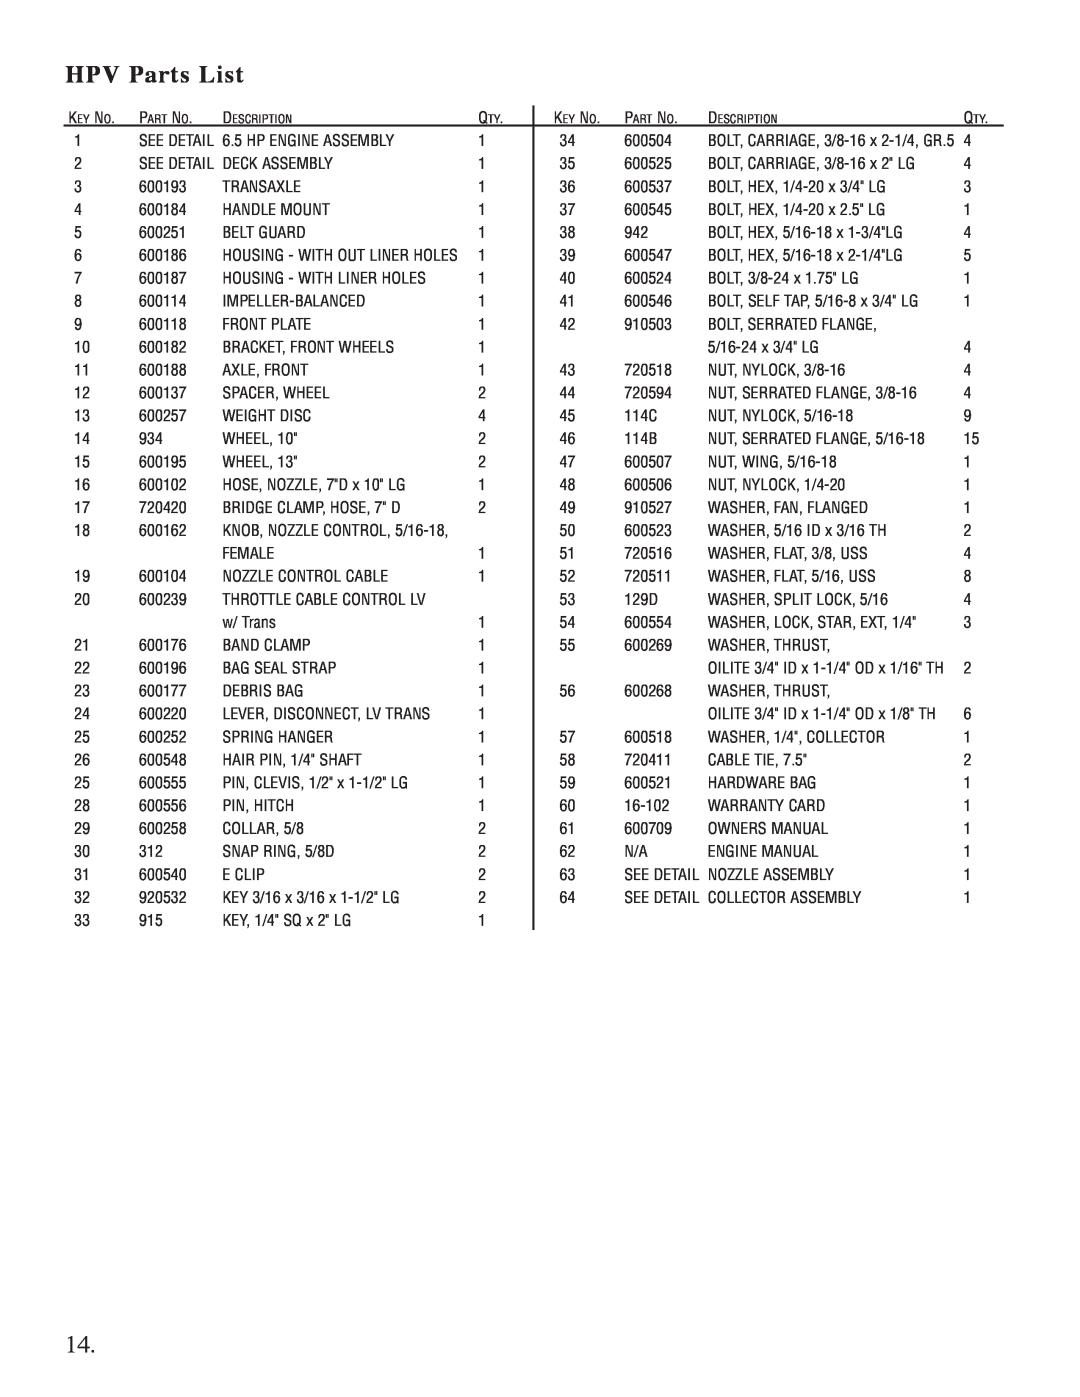 Briggs & Stratton 5631, 5621 manual HPV Parts List 